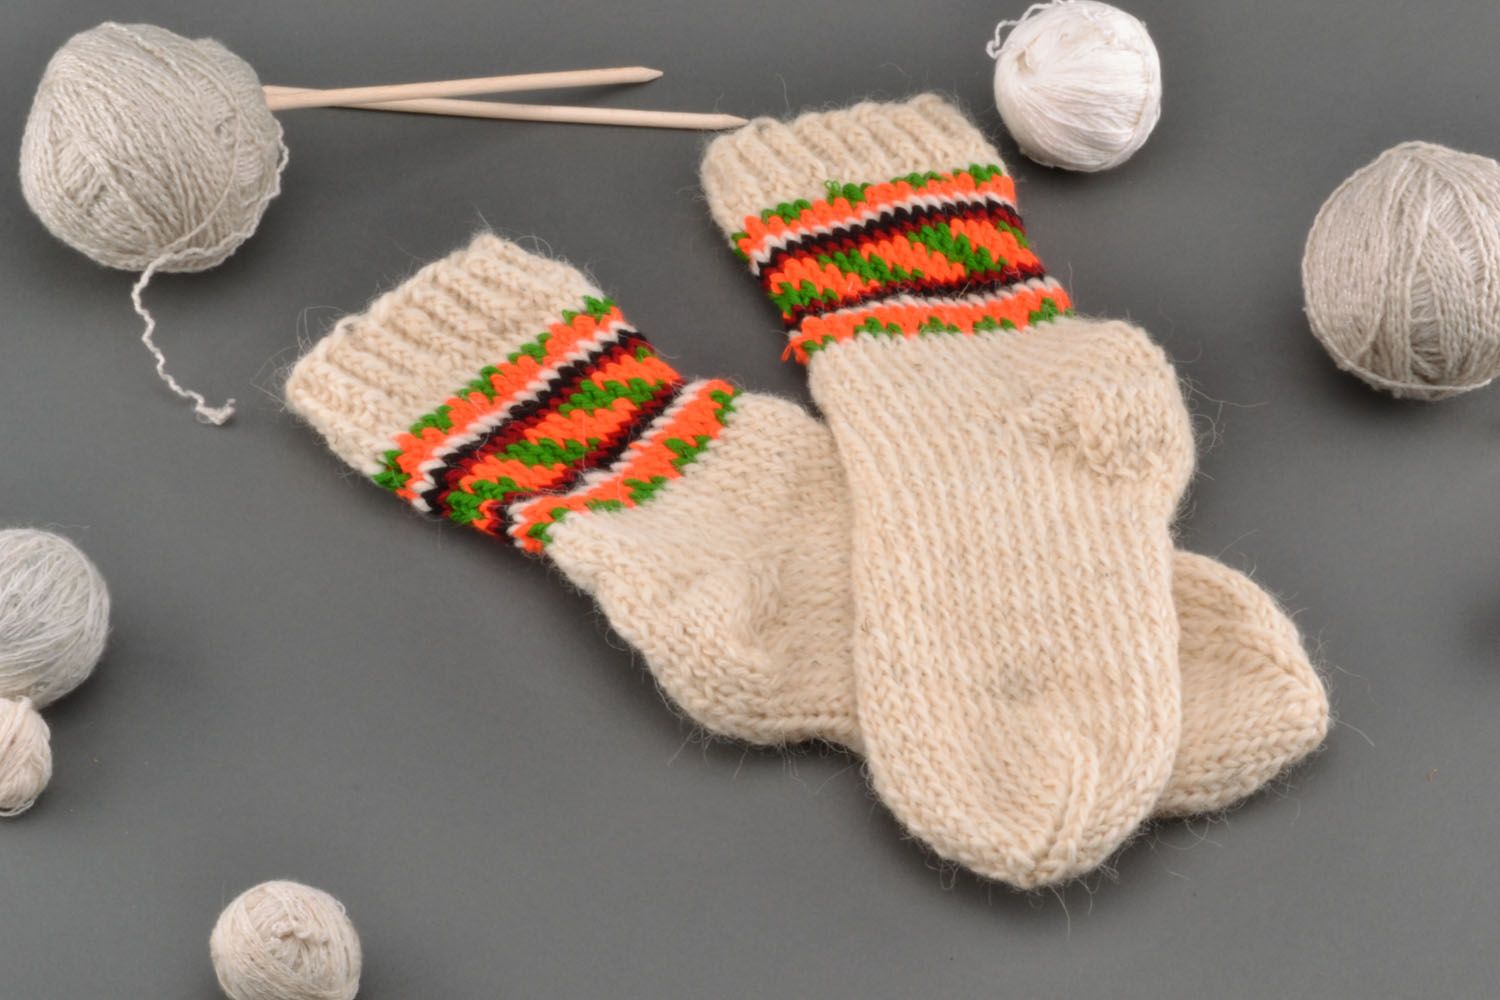 Homemade knitted woolen socks photo 1